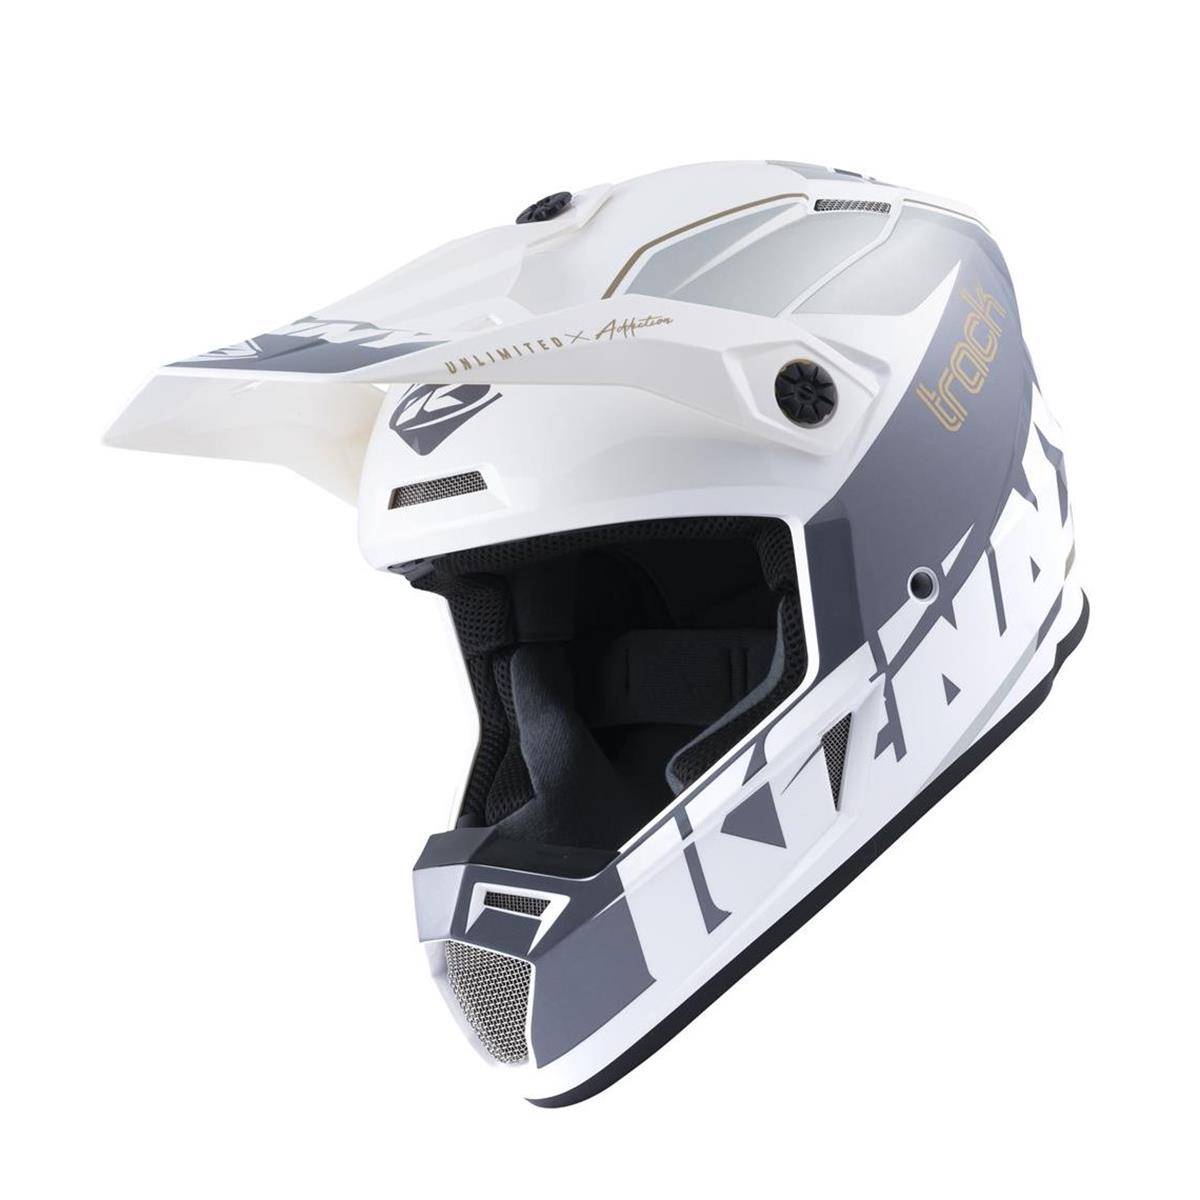 Kenny Motocross-Helm Track